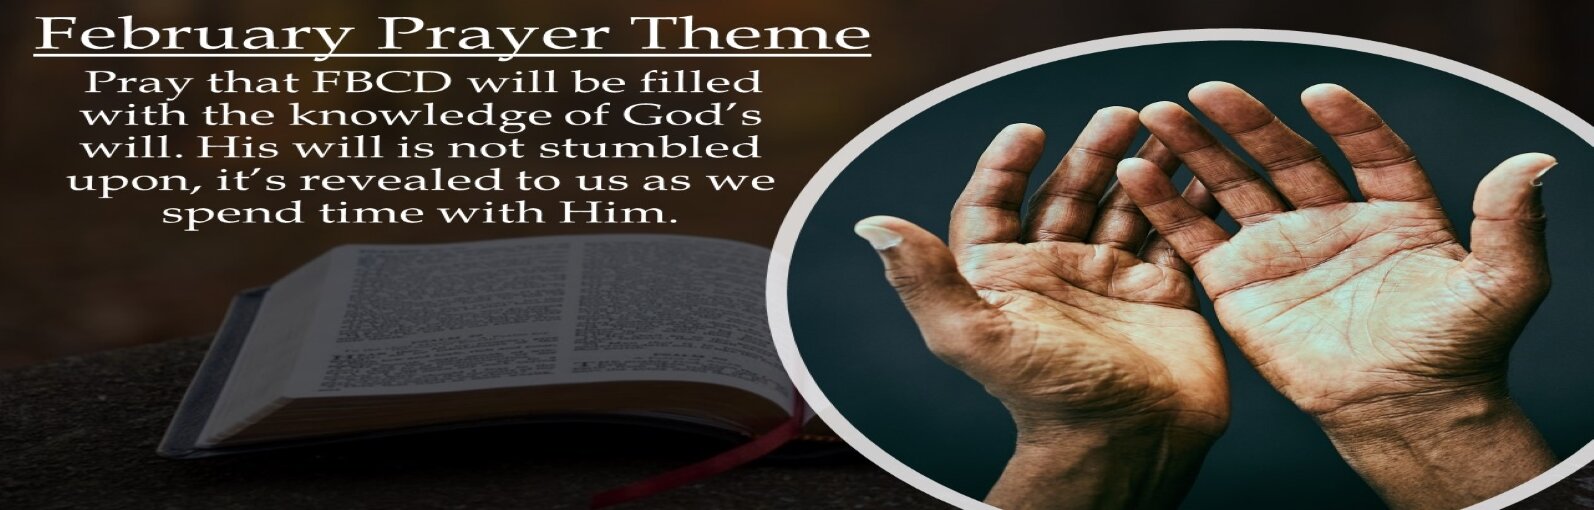 /images/r/feb-prayer-theme-2-banner/c1594x510/feb-prayer-theme-2-banner.jpg